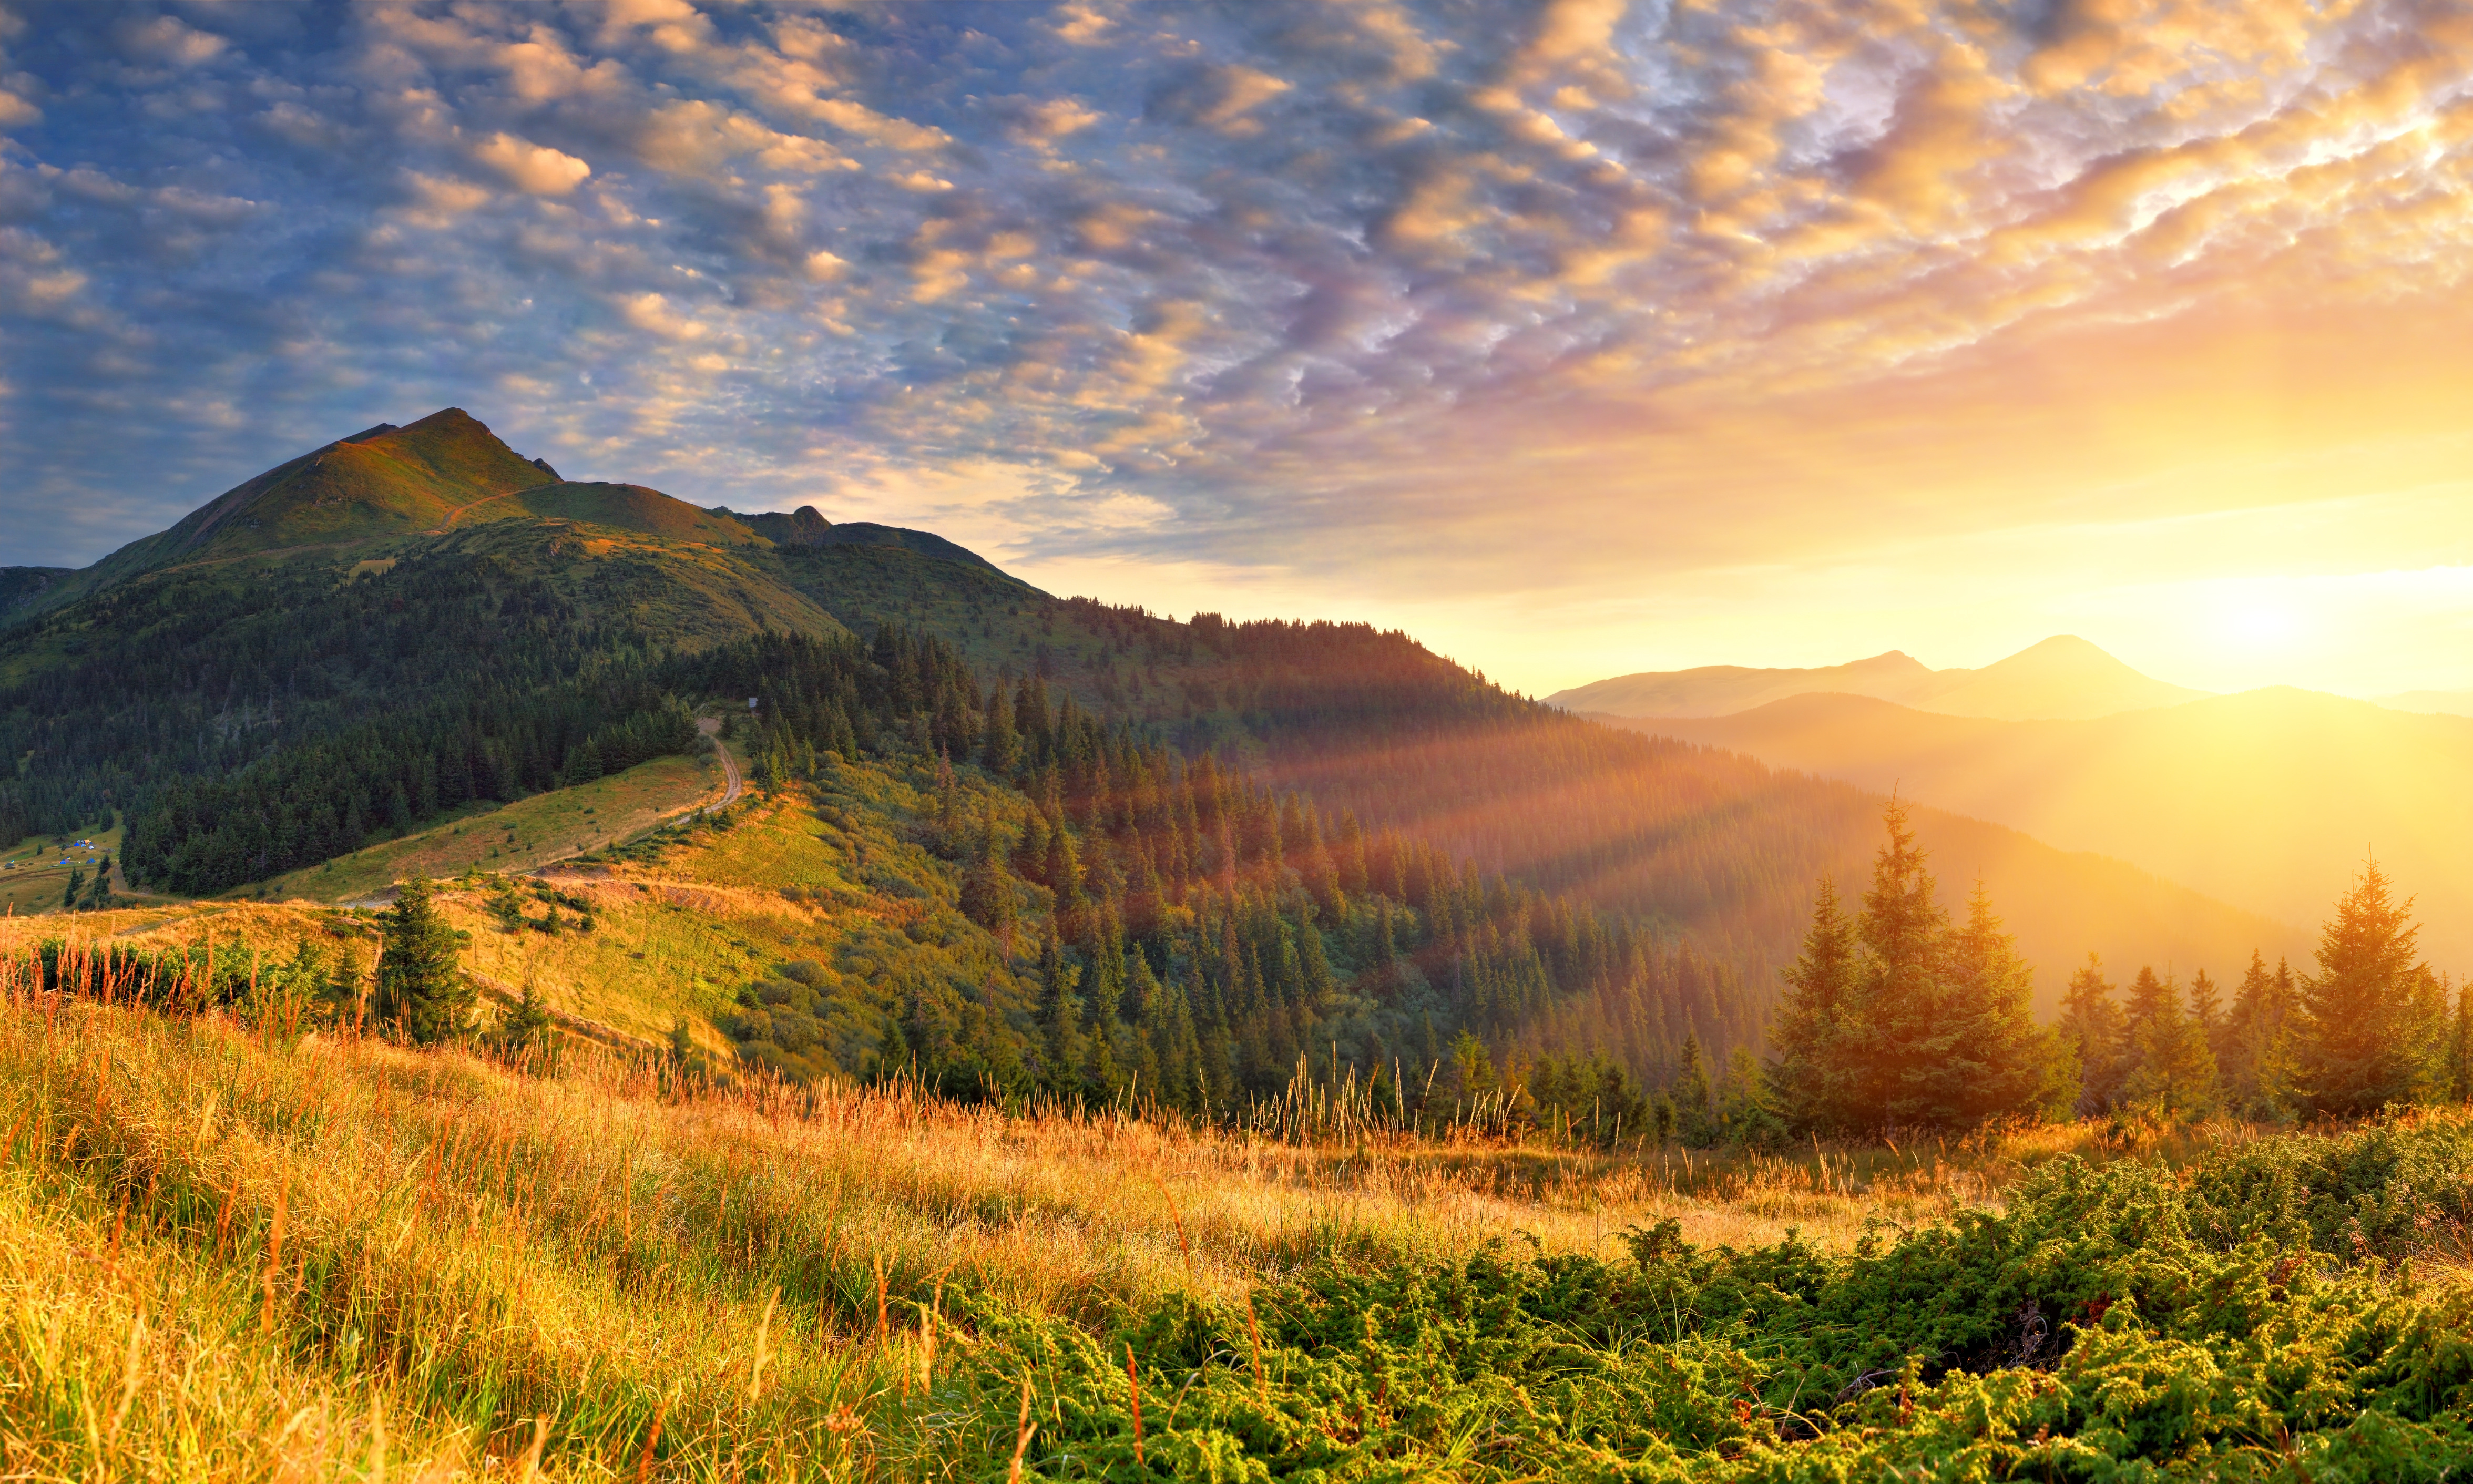 Mountain Scenery Morning Sun Rays 4k Wallpaper,HD Nature Wallpapers,4k